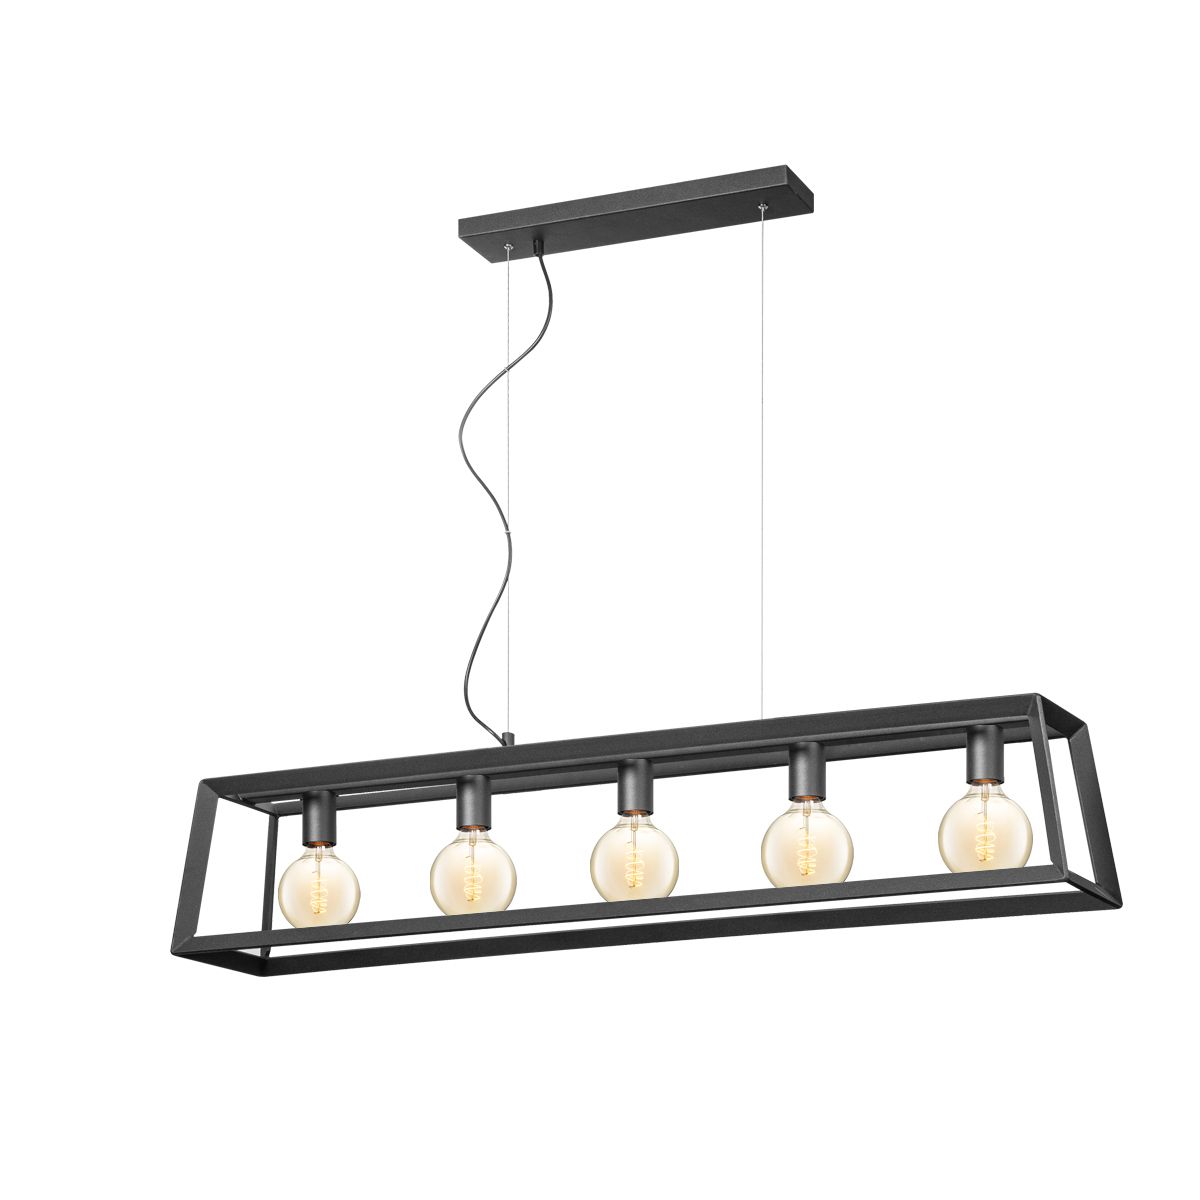 Light depot - hanglamp Dito taps 5L - zwart - Outlet